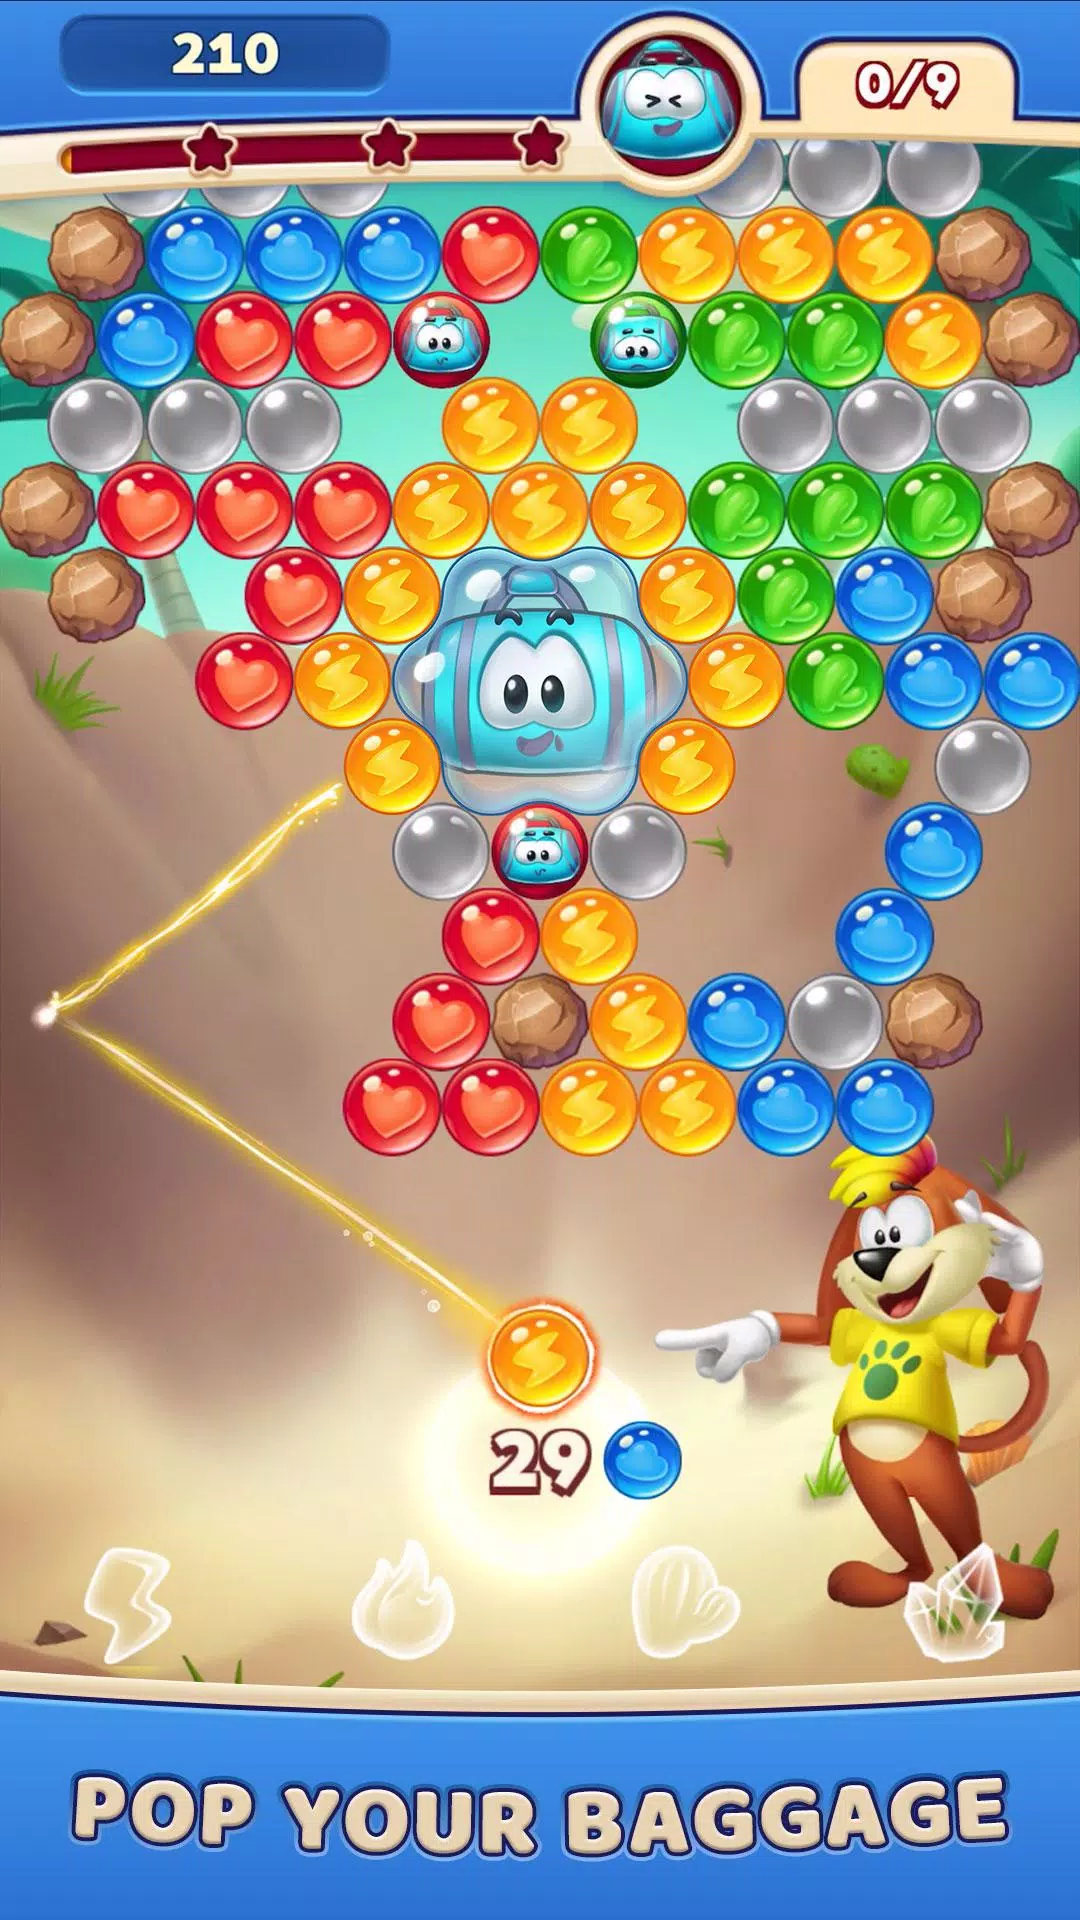 Bubble Shooter - Bubble Pop Match 3 Game - Microsoft Apps